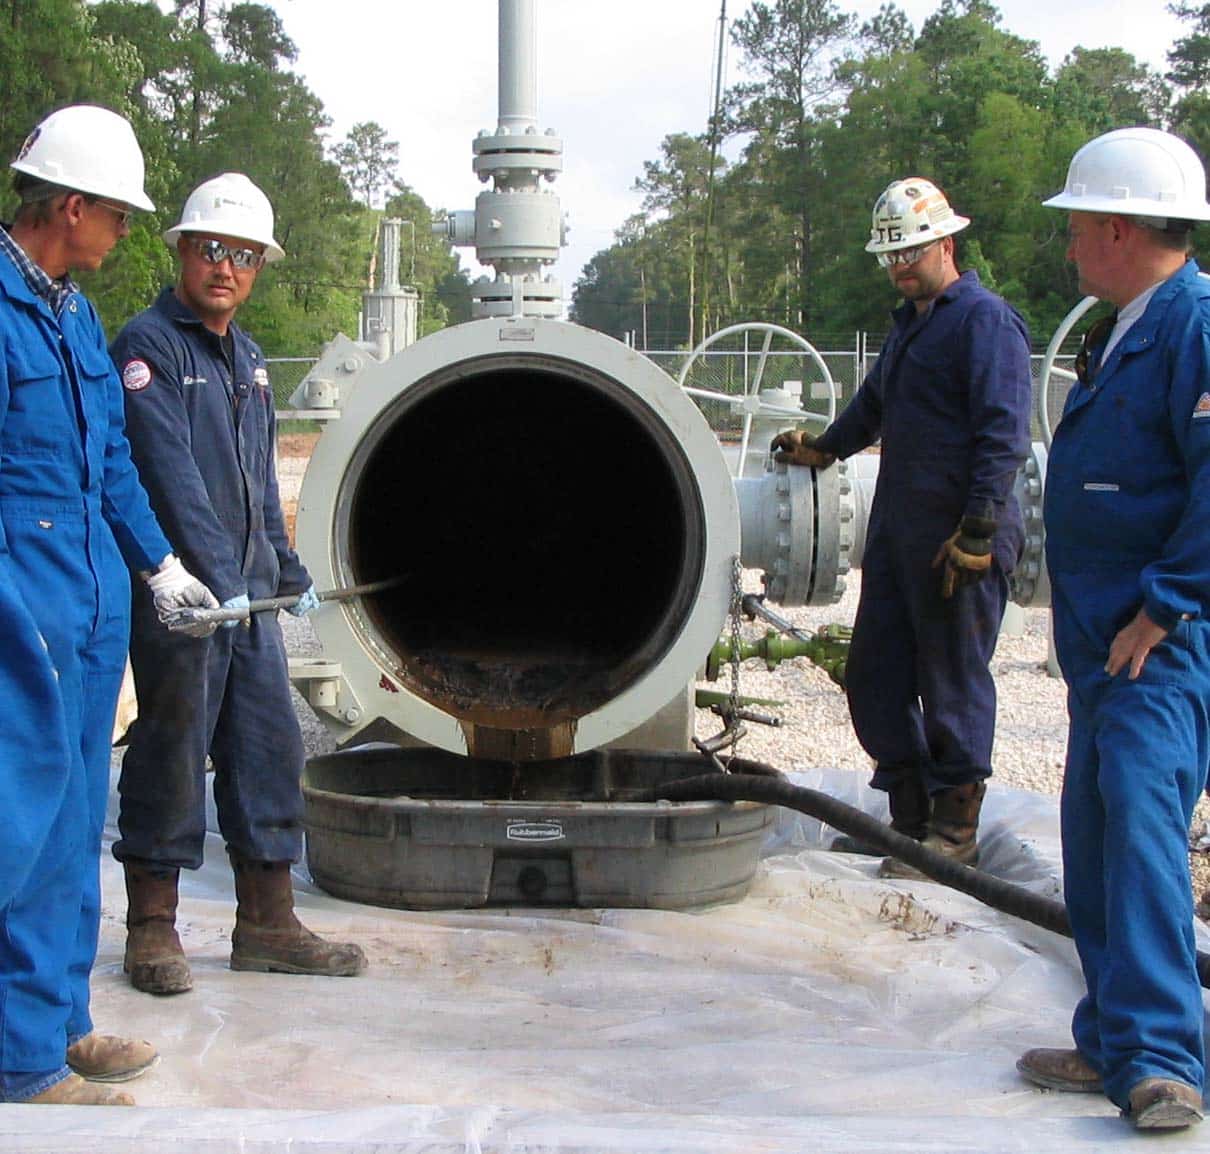 Receiving pipeline pig at job site